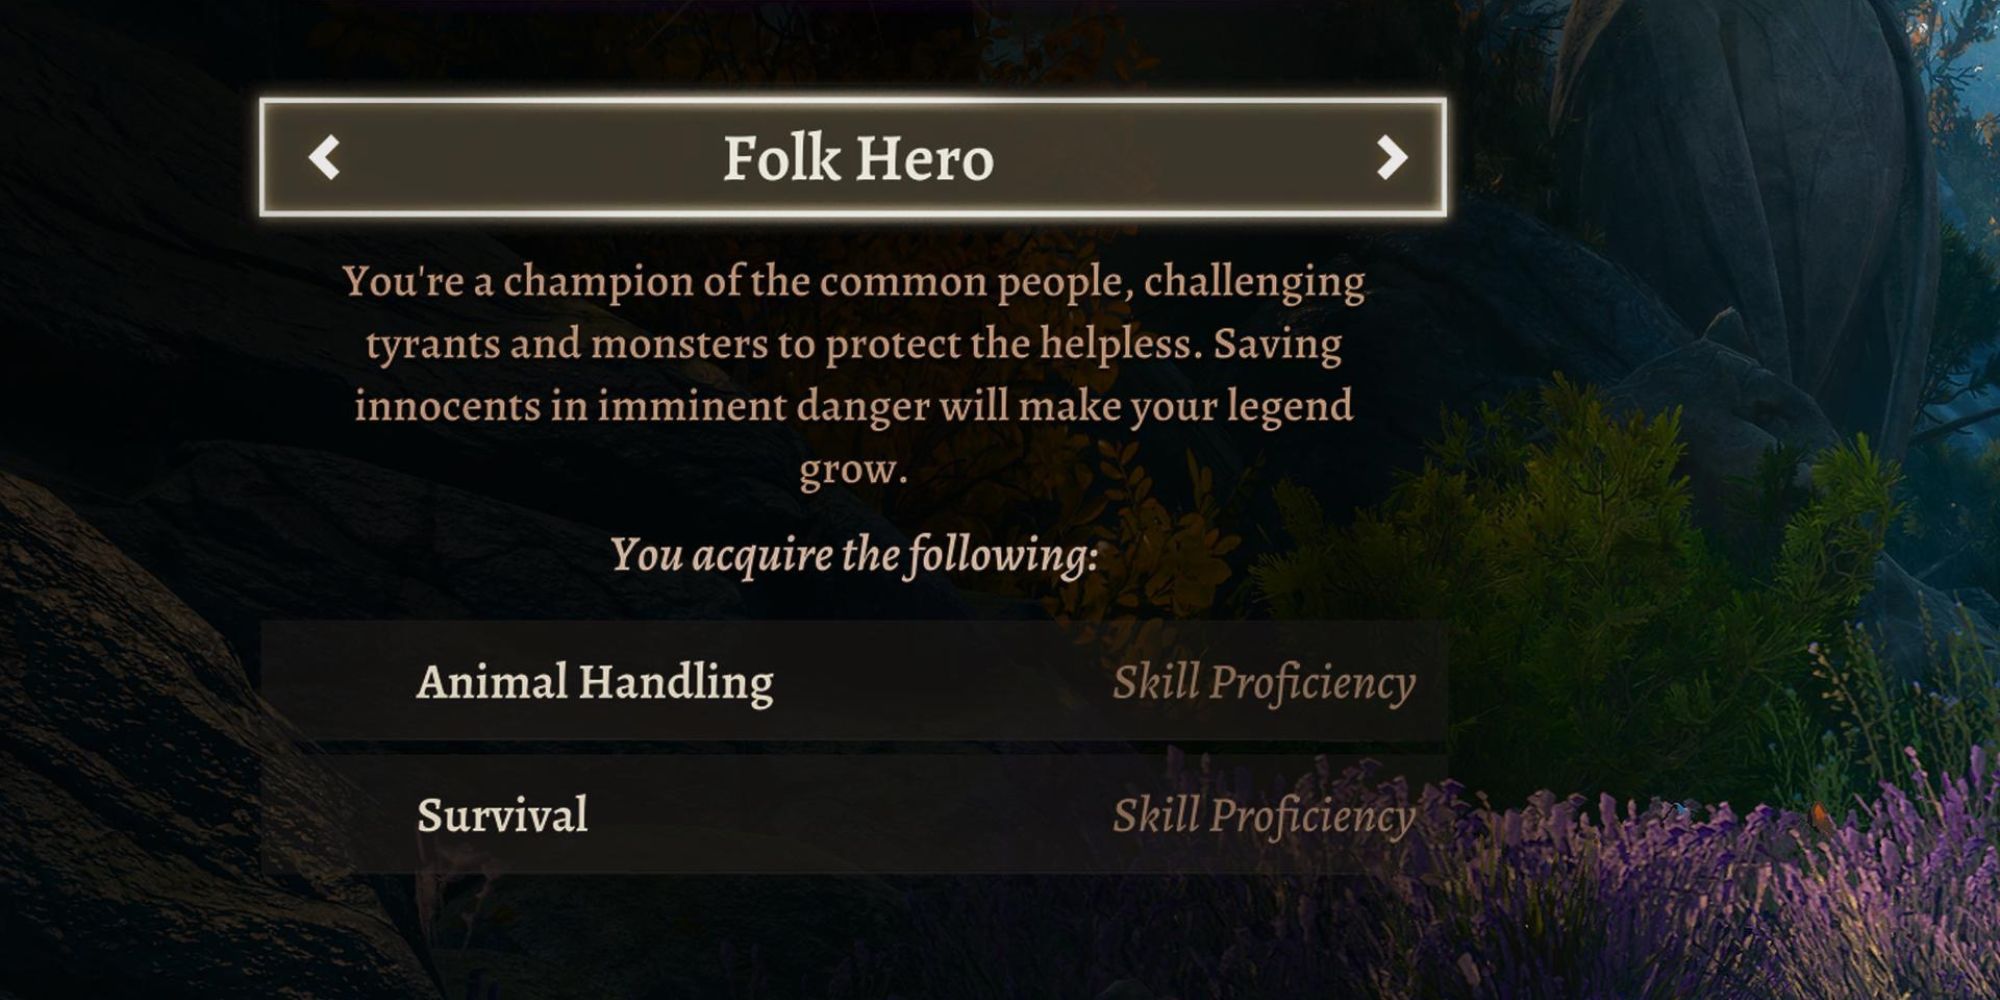 The Folk Hero background in Baldur's Gate 3